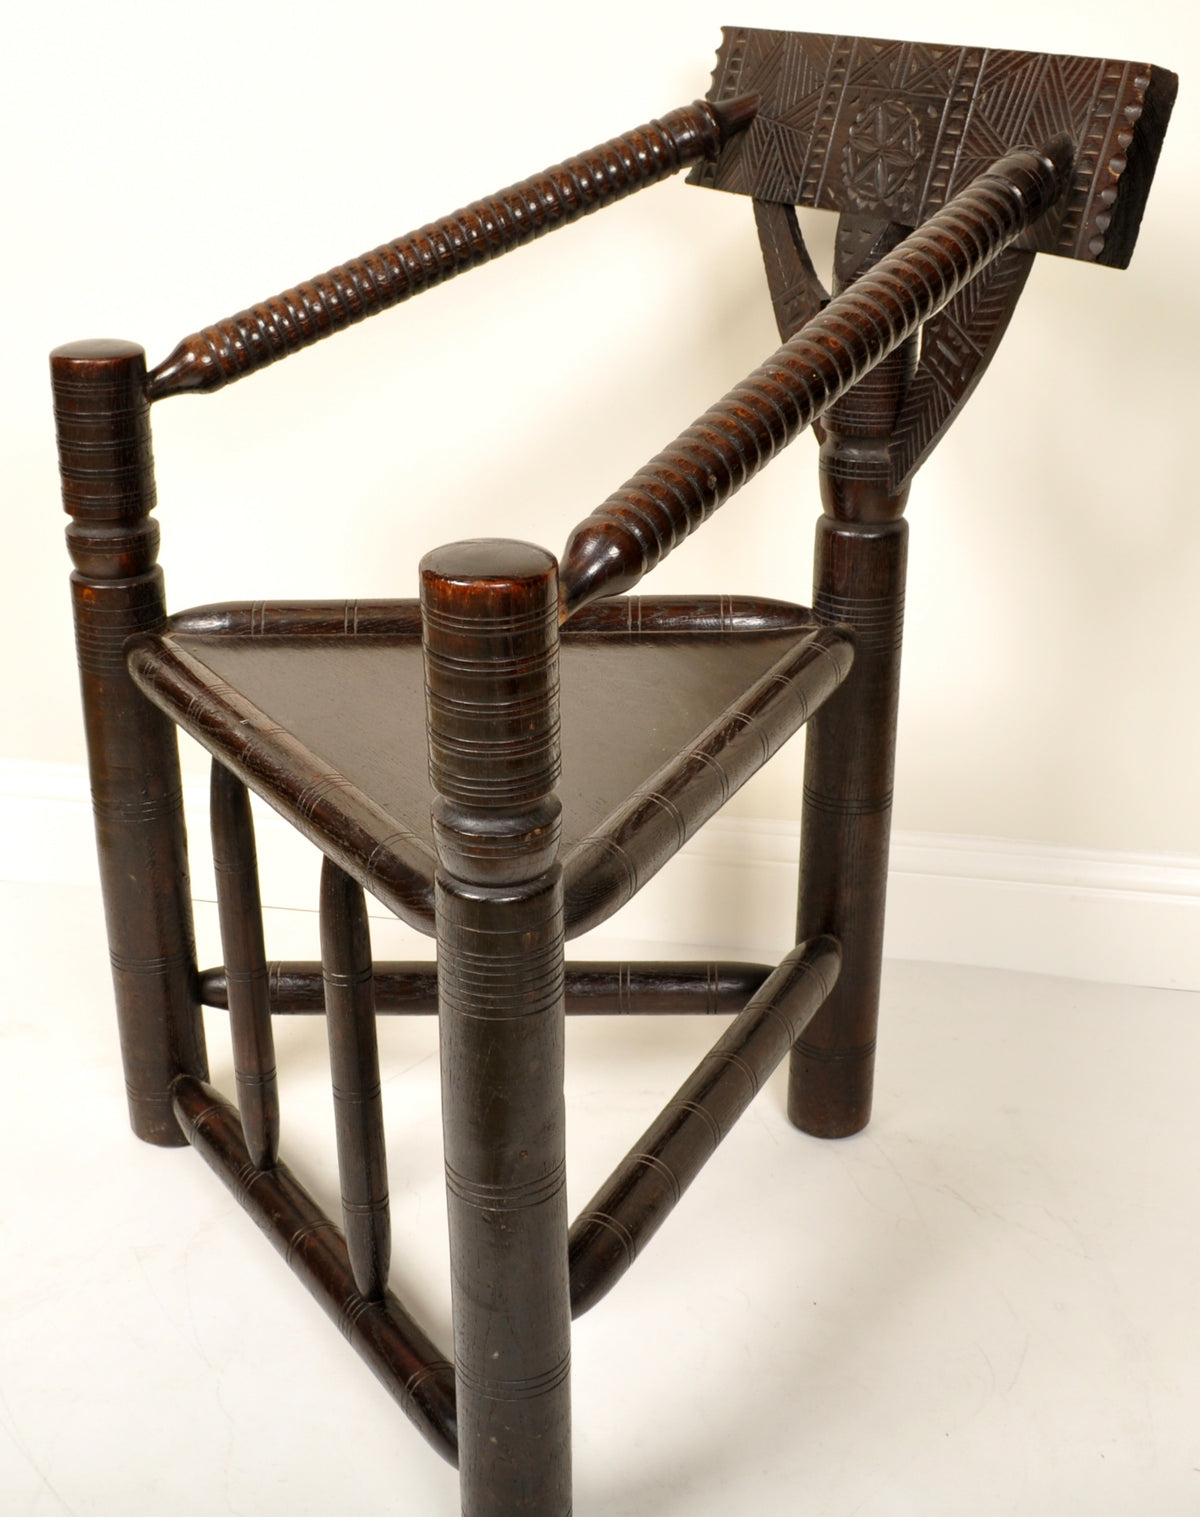 Antique English Arts & Crafts Turner's Corner Chair, Circa 1900